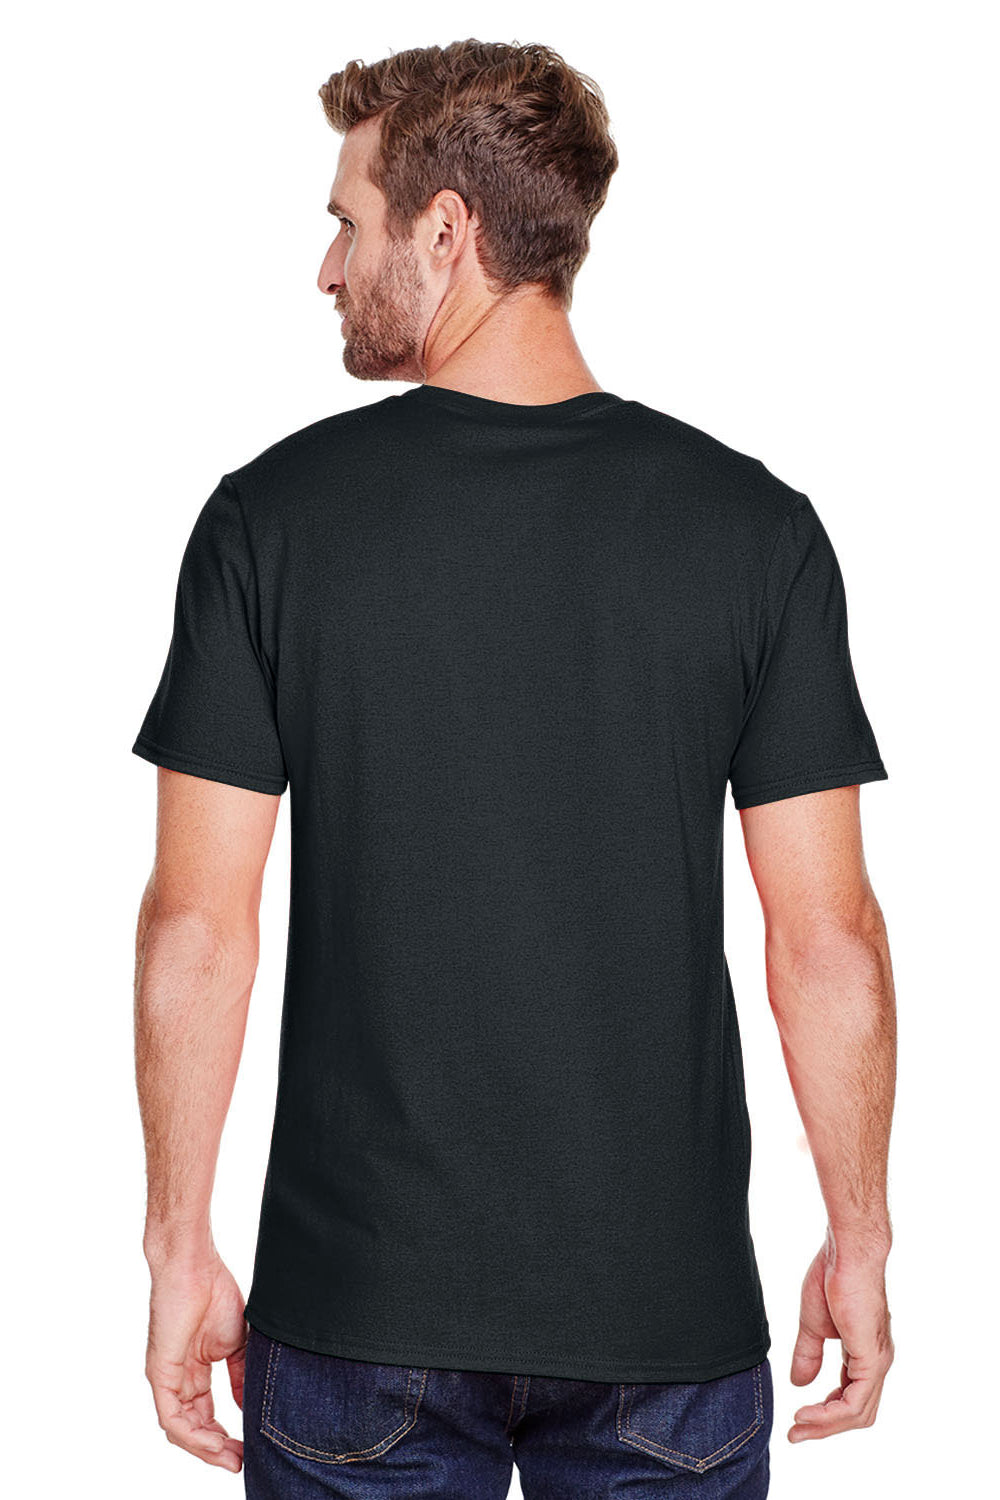 Jerzees 560MR Mens Premium Blend Short Sleeve Crewneck T-Shirt Black Back